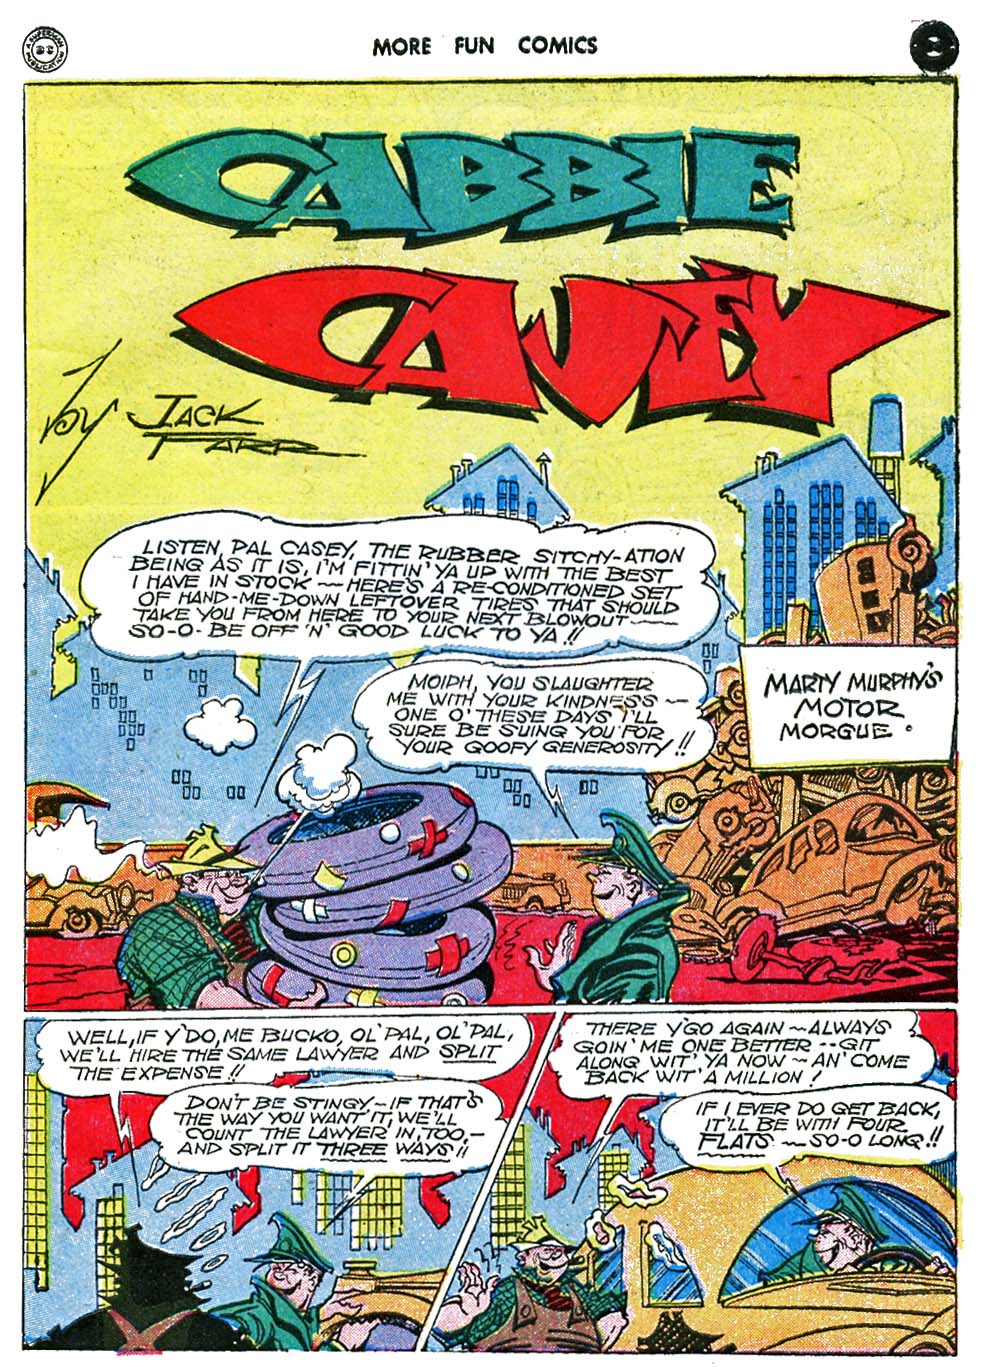 Read online More Fun Comics comic -  Issue #115 - 92